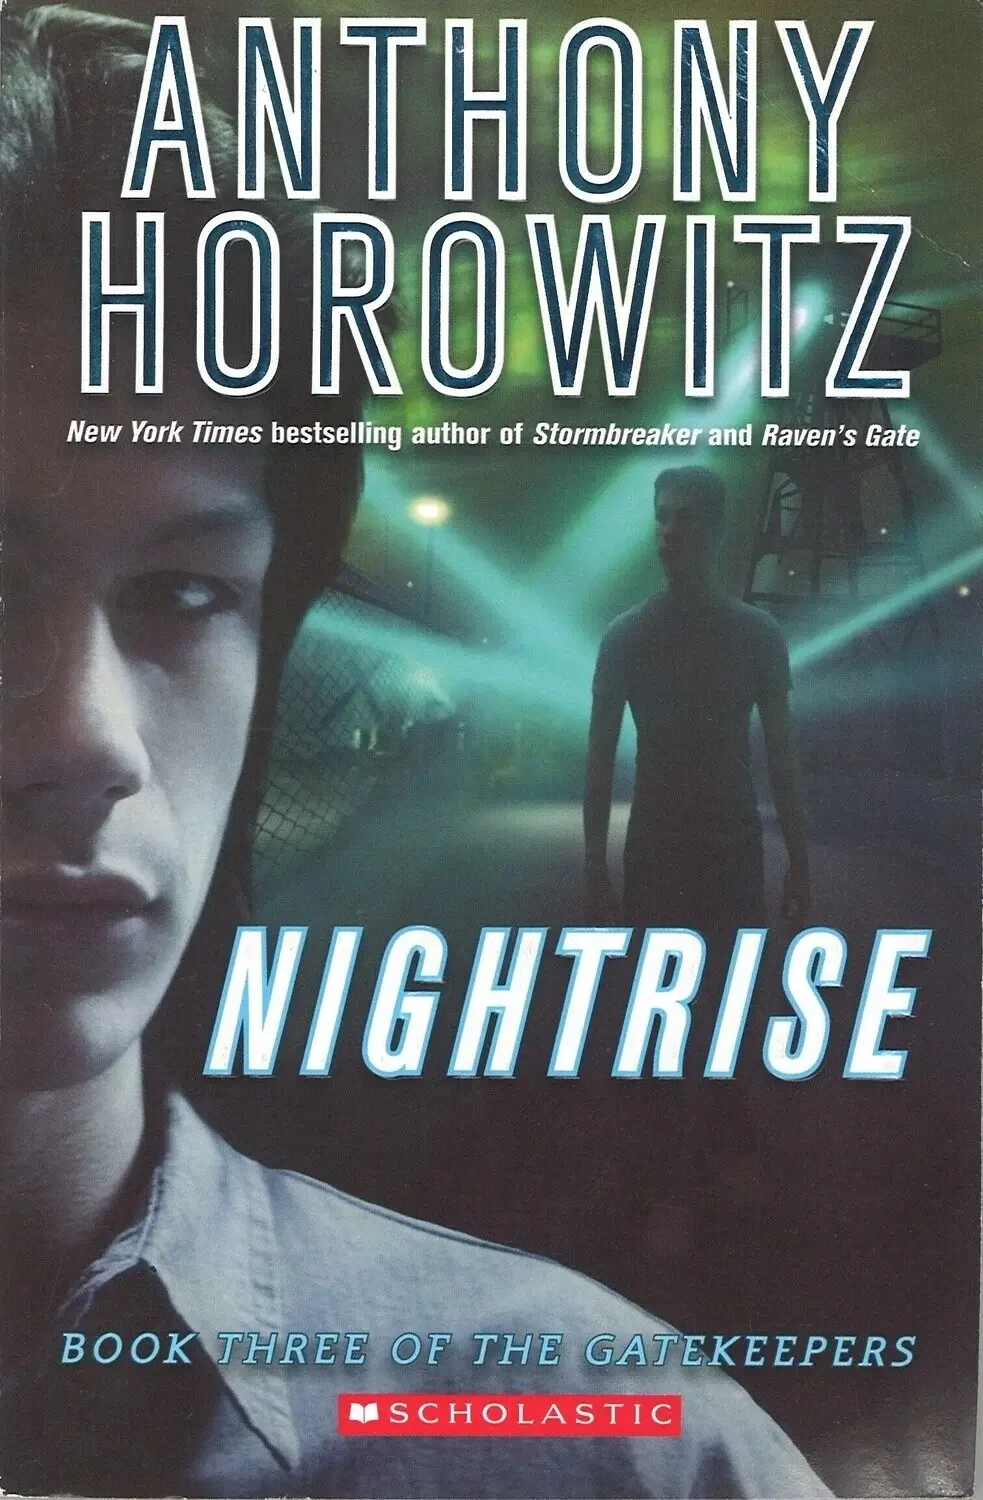 Nightrise (The Gatekeepers series Book 3), Anthony Horowitz